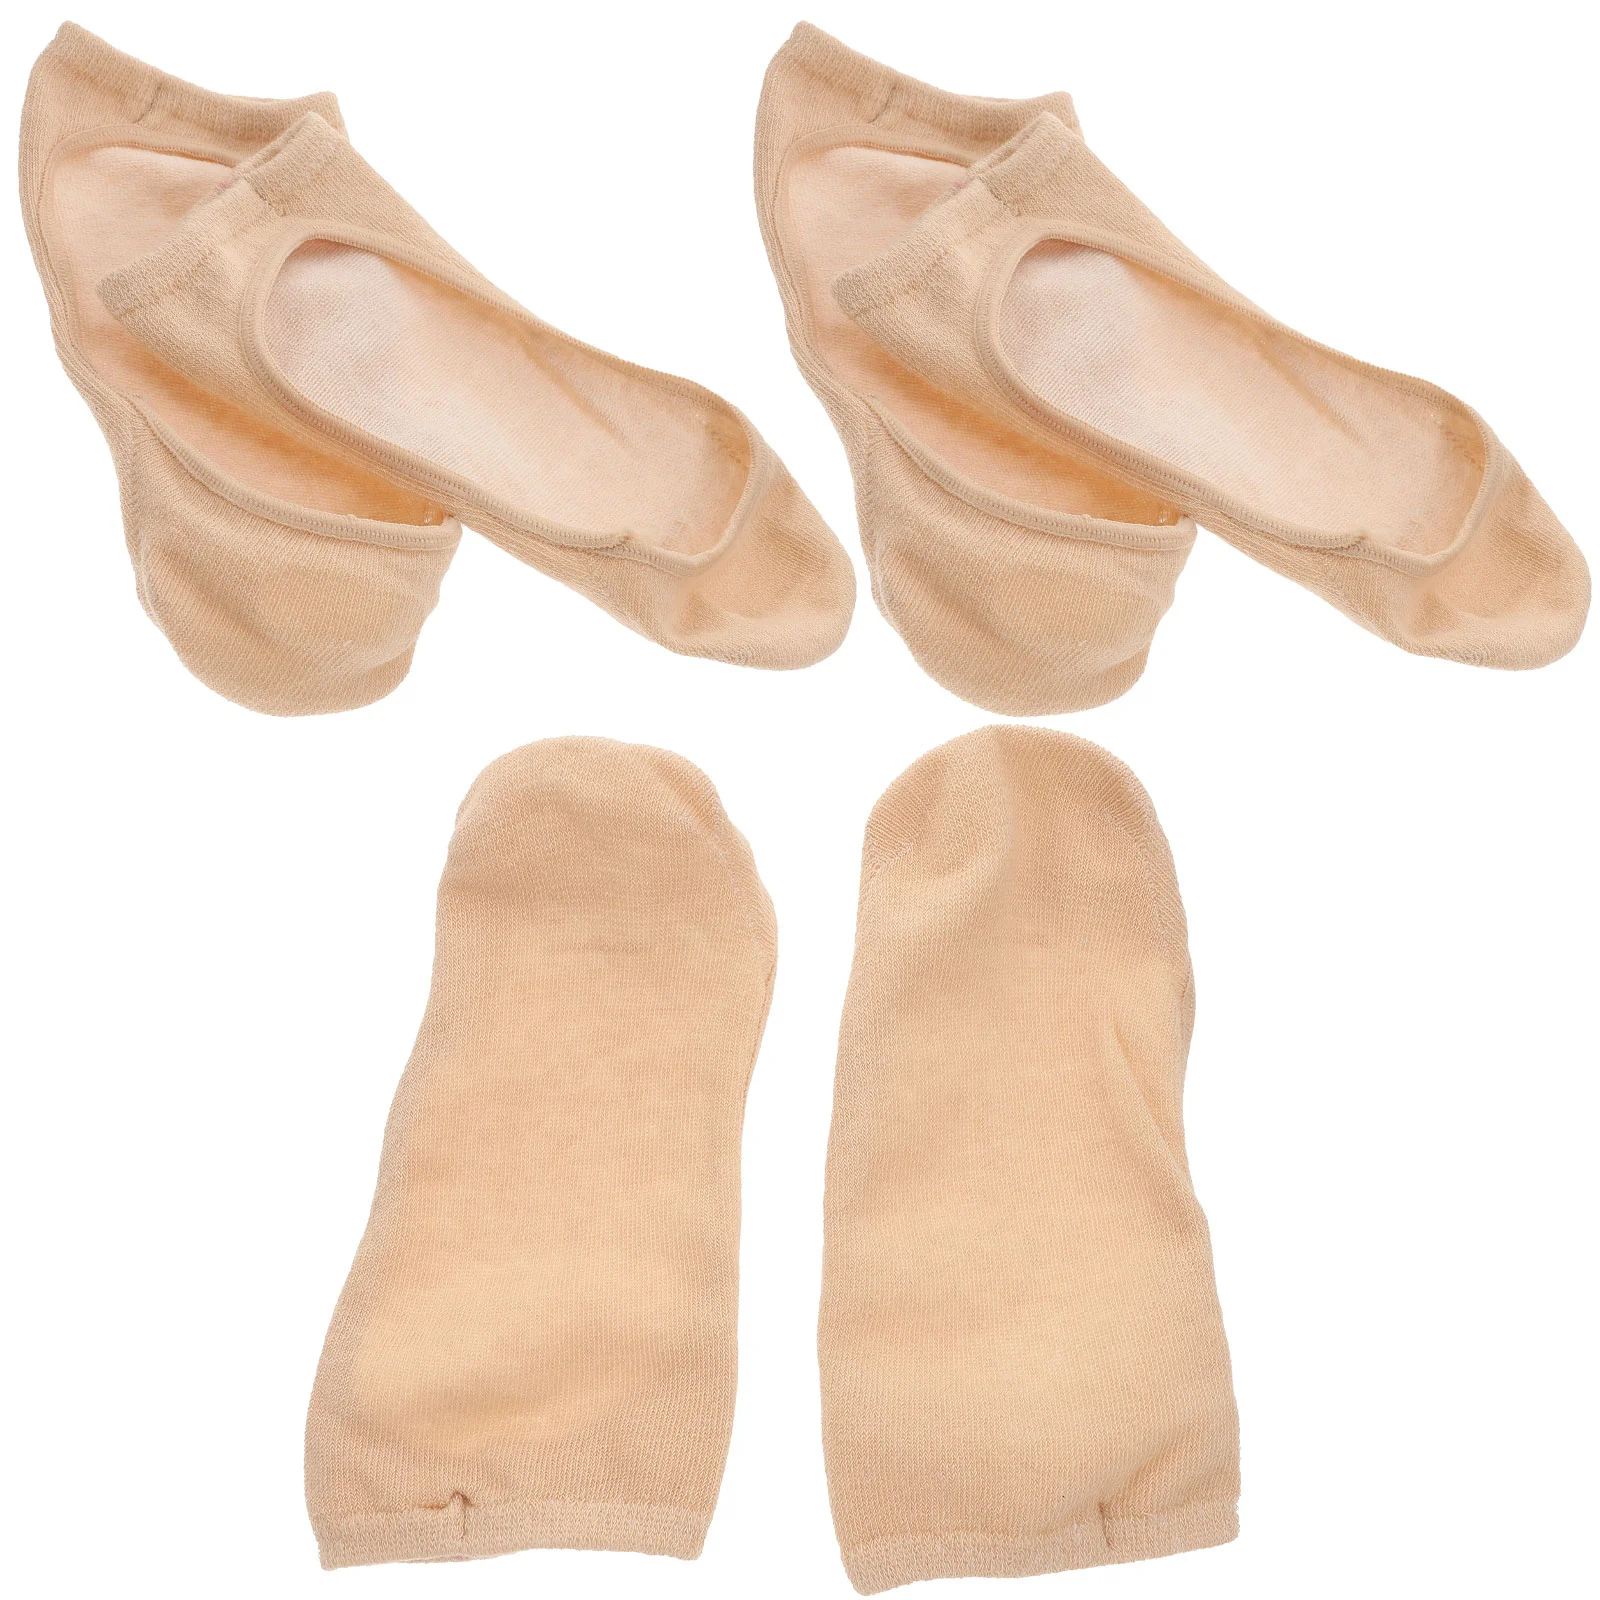 

3 Pairs of Bamboo Fiber Silicone Socks Anti-Skid Boat Socks Invisible Socks Shallow Mouth Socks (Skin Color)